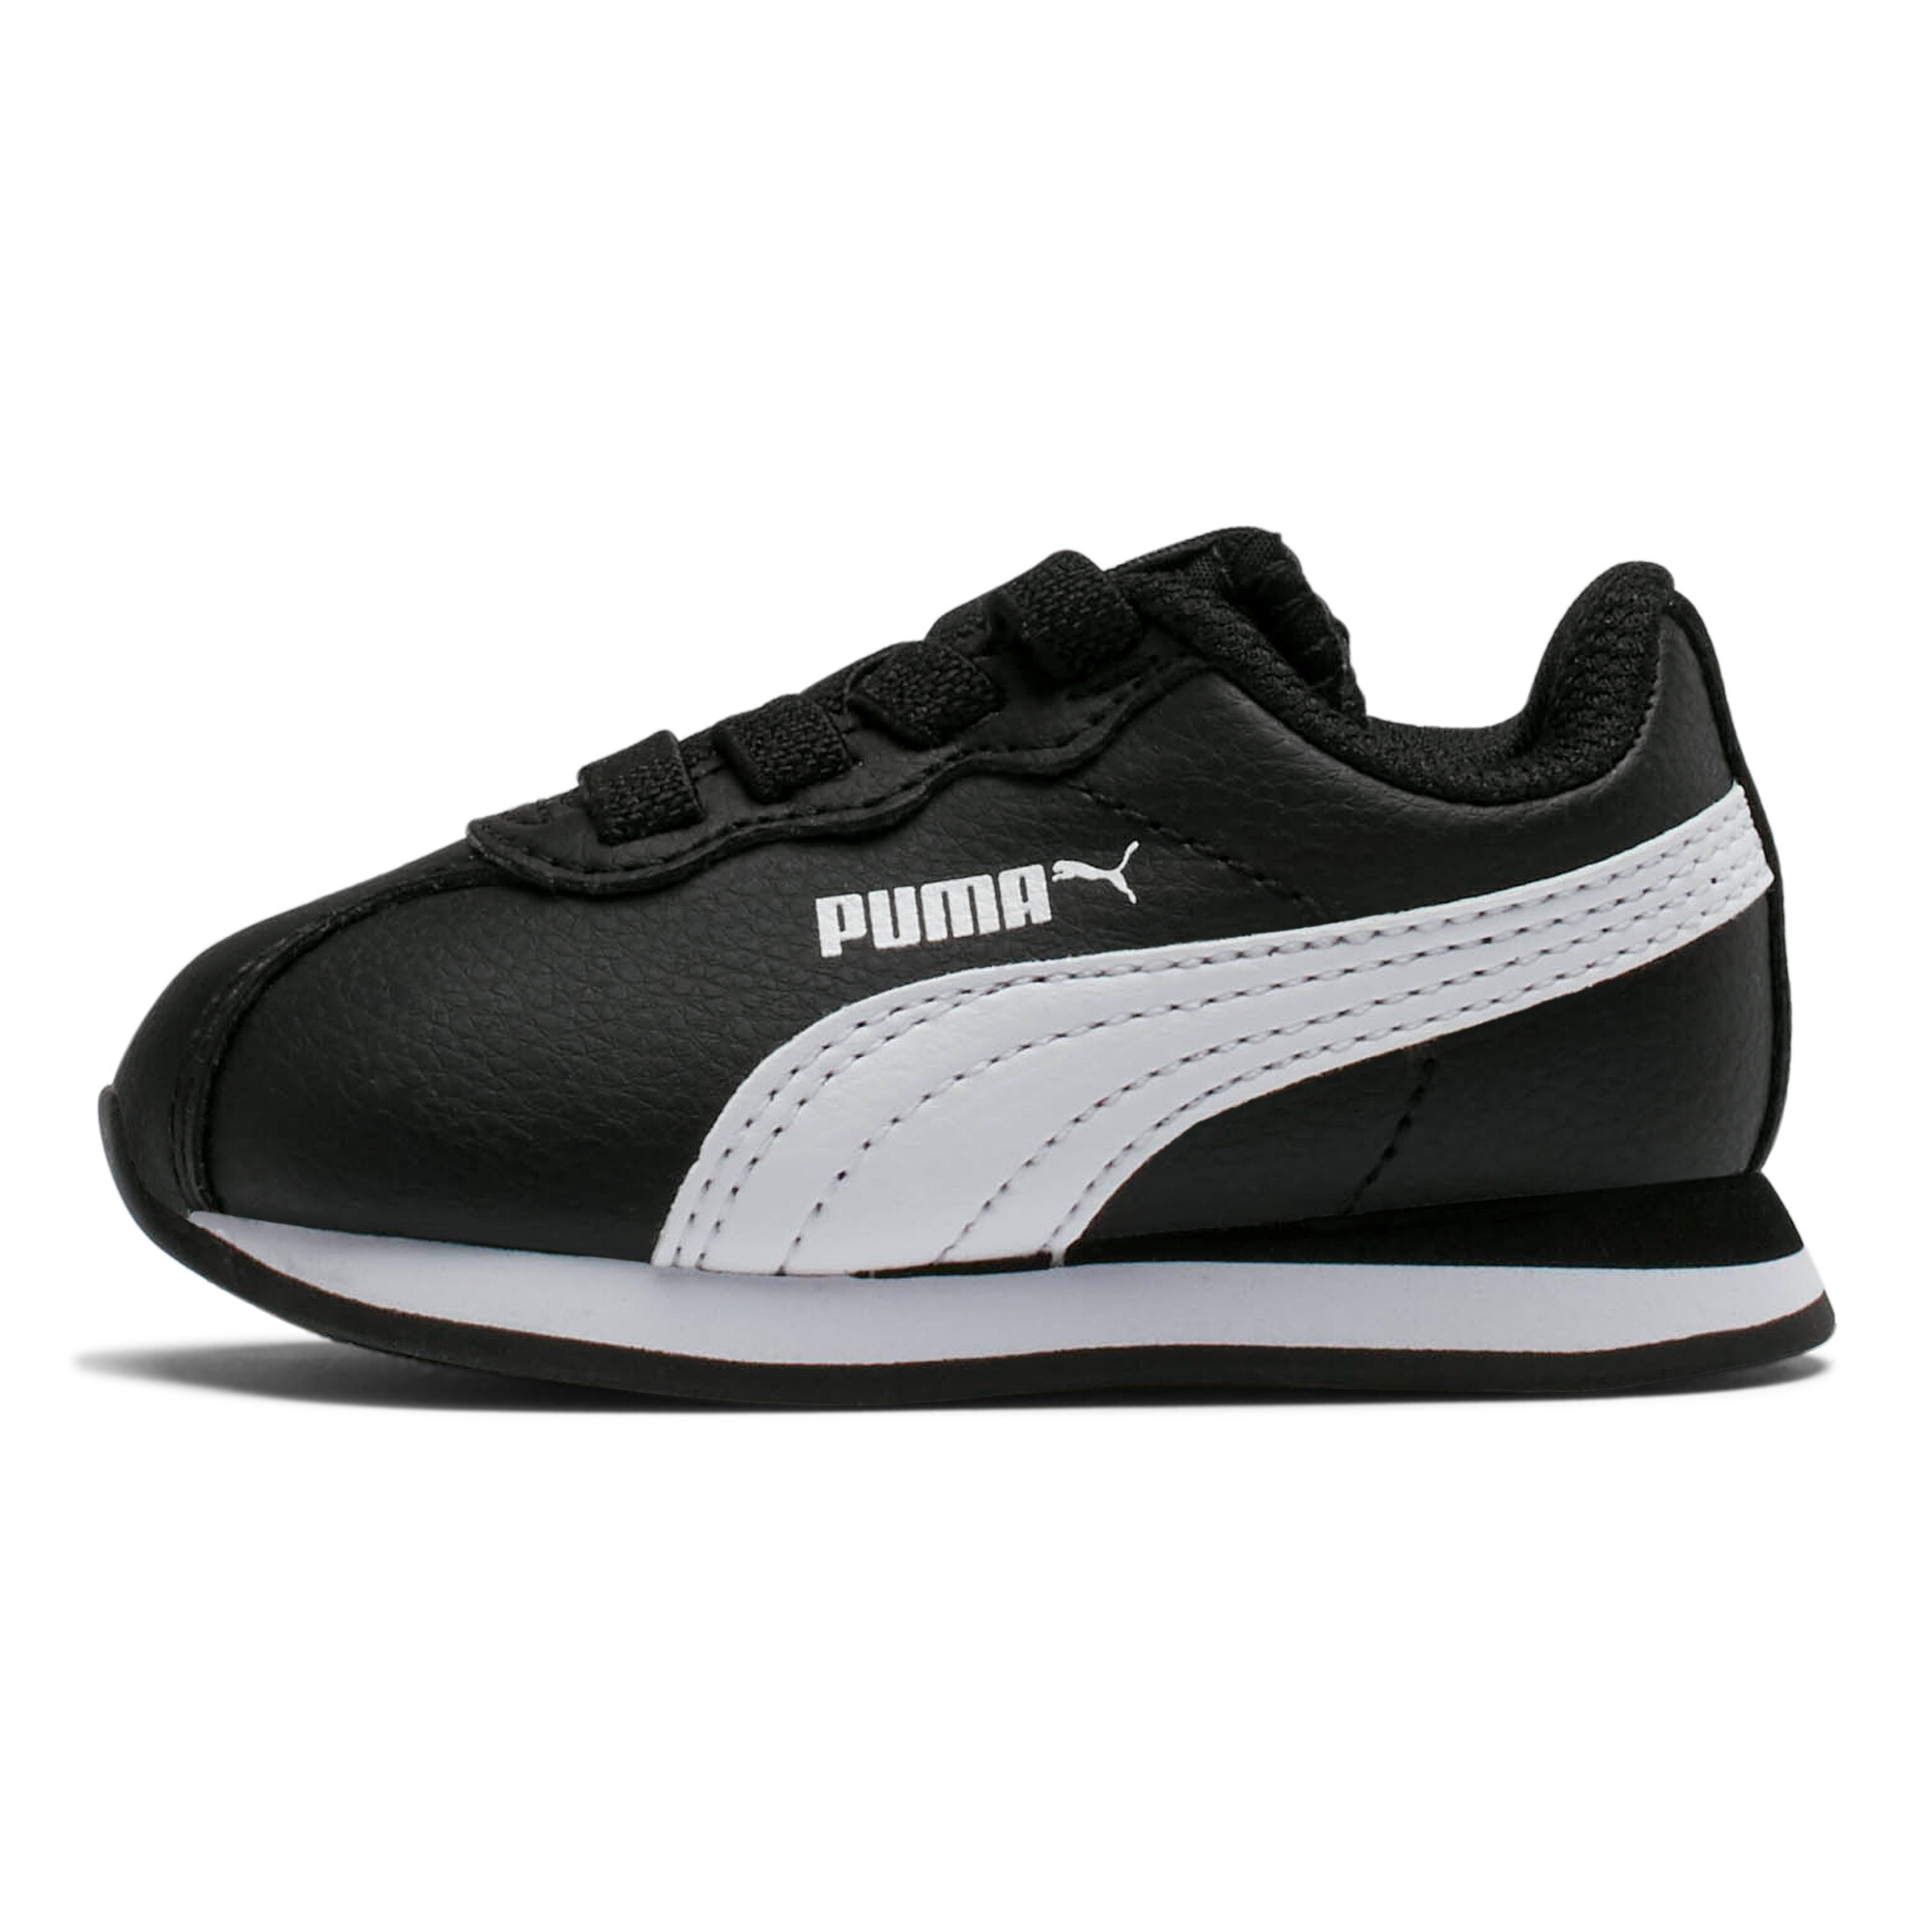 PUMA Turin II AC Shoes | eBay